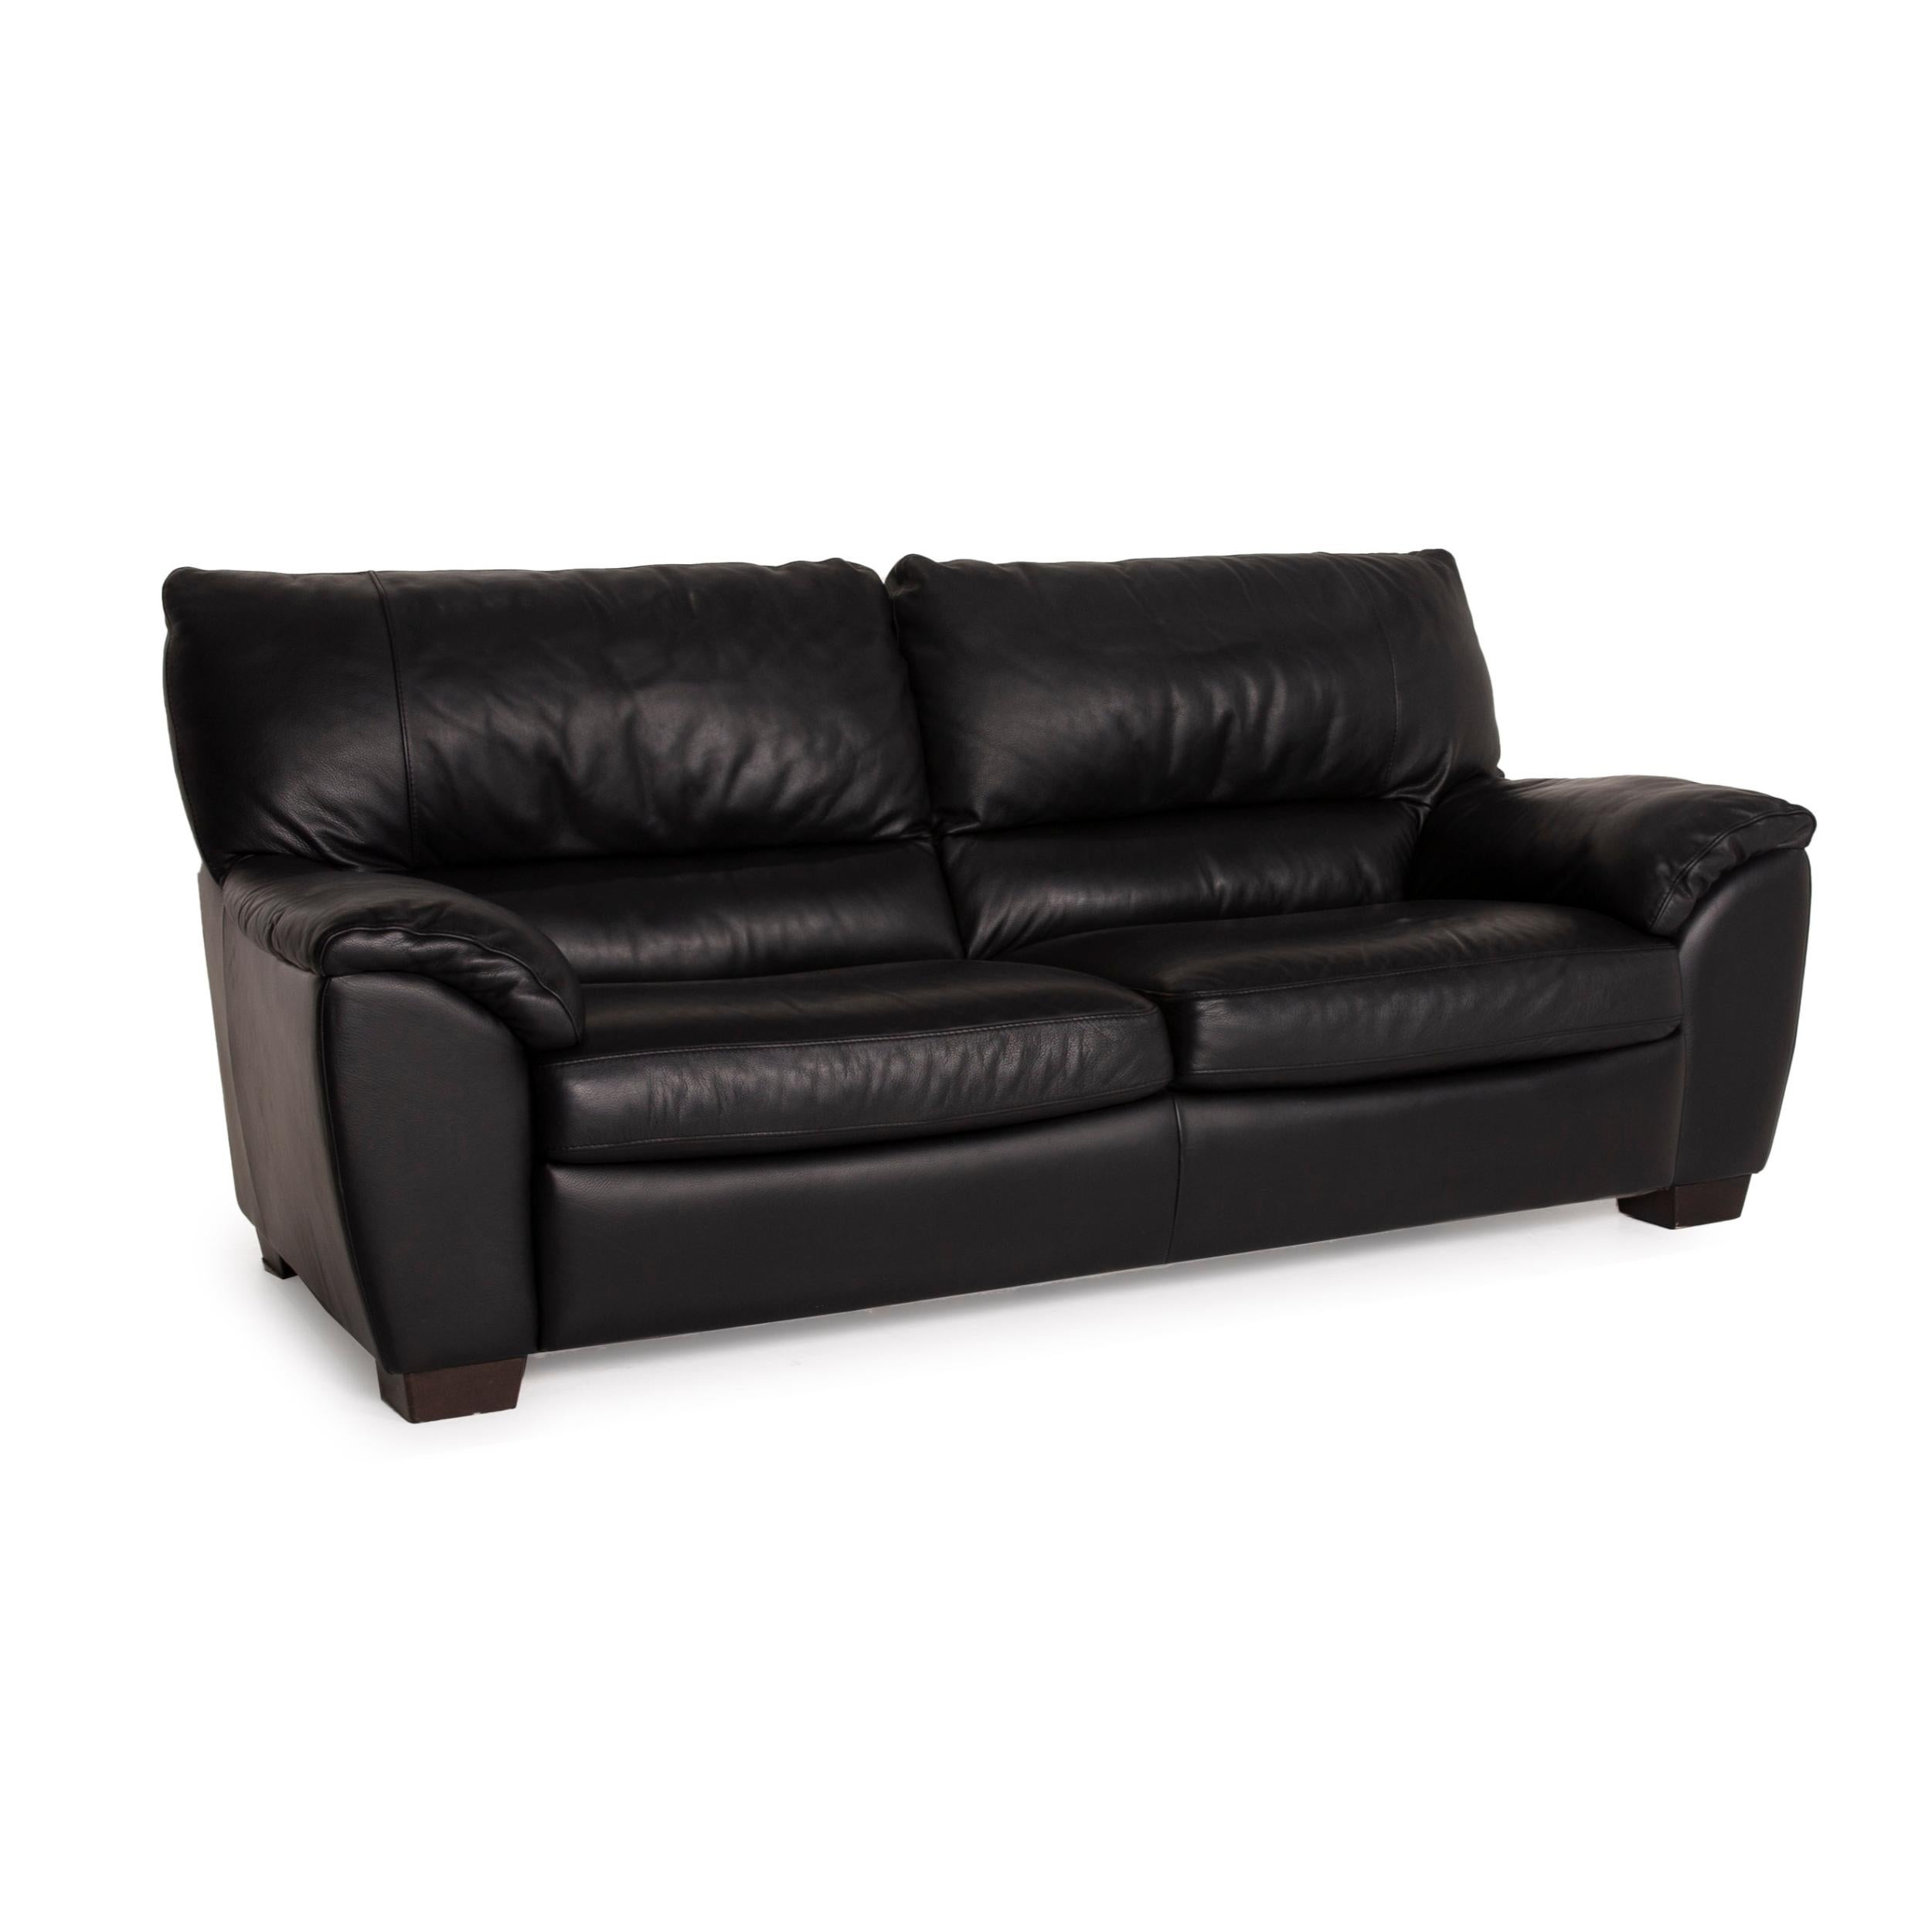 Italian Natuzzi Two-Seater Leather Sofa Black